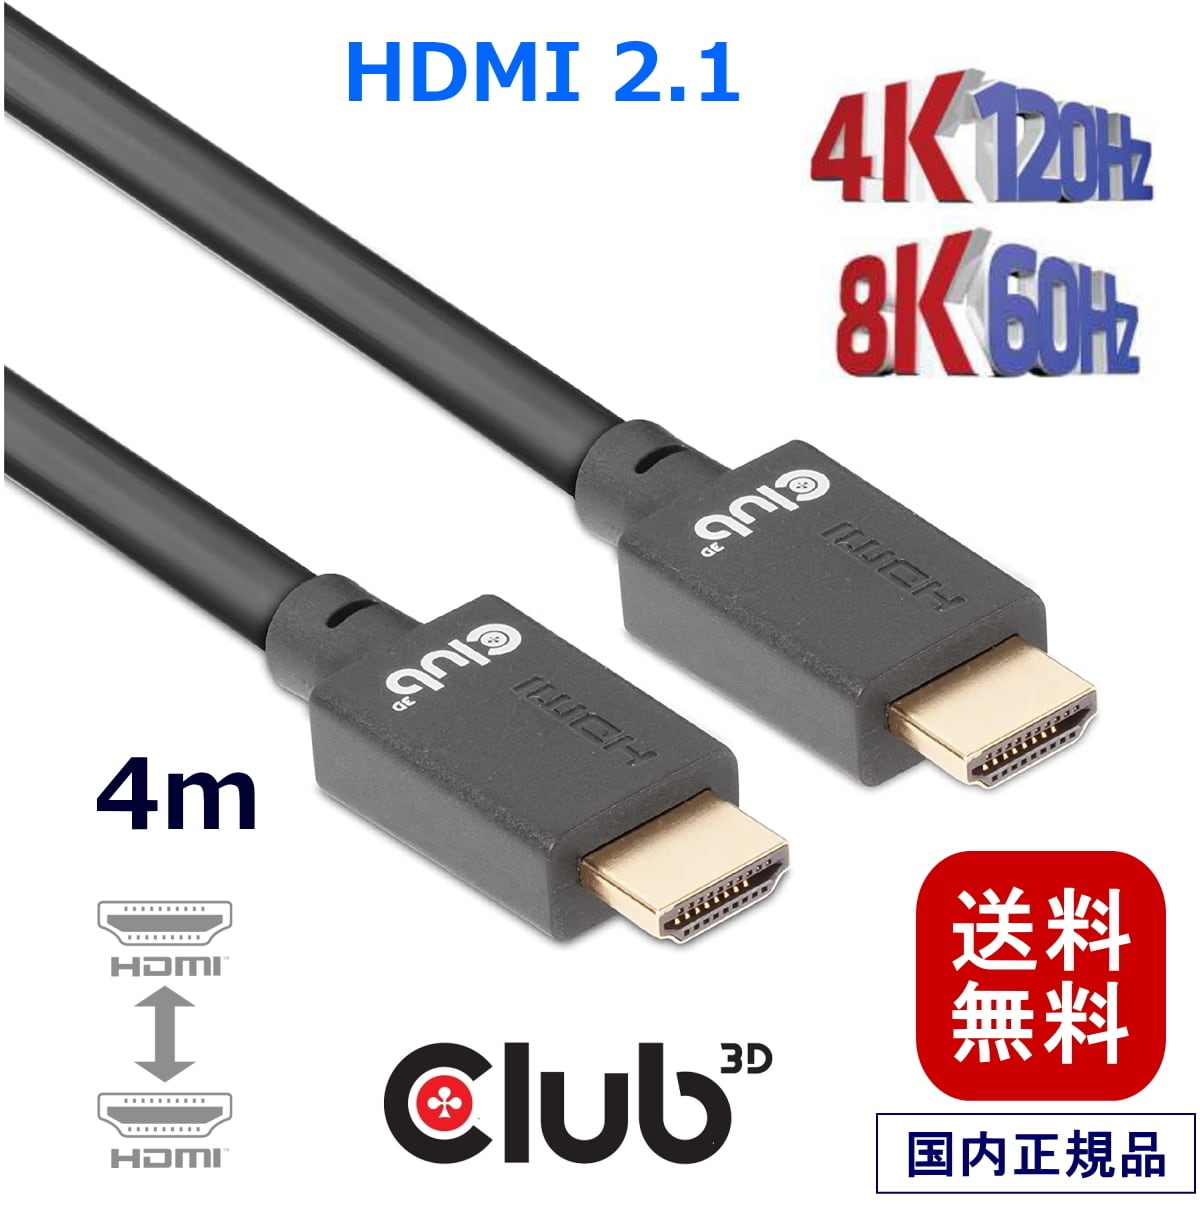 CAC-1374】Club 3D HDMI 2.1 4K120Hz 8K60Hz 48Gbps オス オス 4m 26AWG Ultra High  Speed Cable ウルトラ ハイスピード ケーブル (CAC-1374) BearHouse